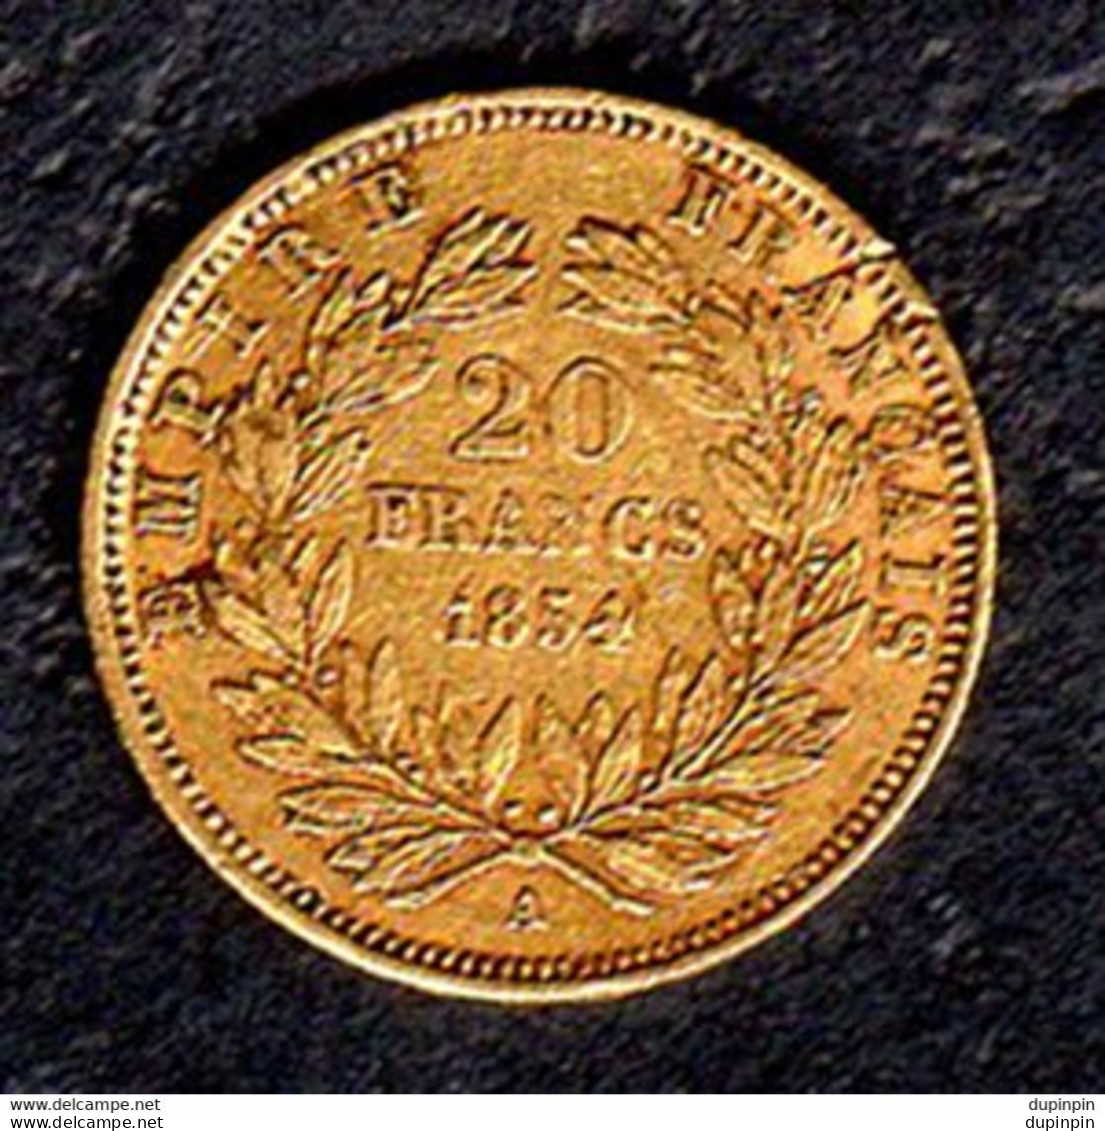 20 FRANCS OR - NAPOLEON III - TETE NUE 1854 - 20 Centimes